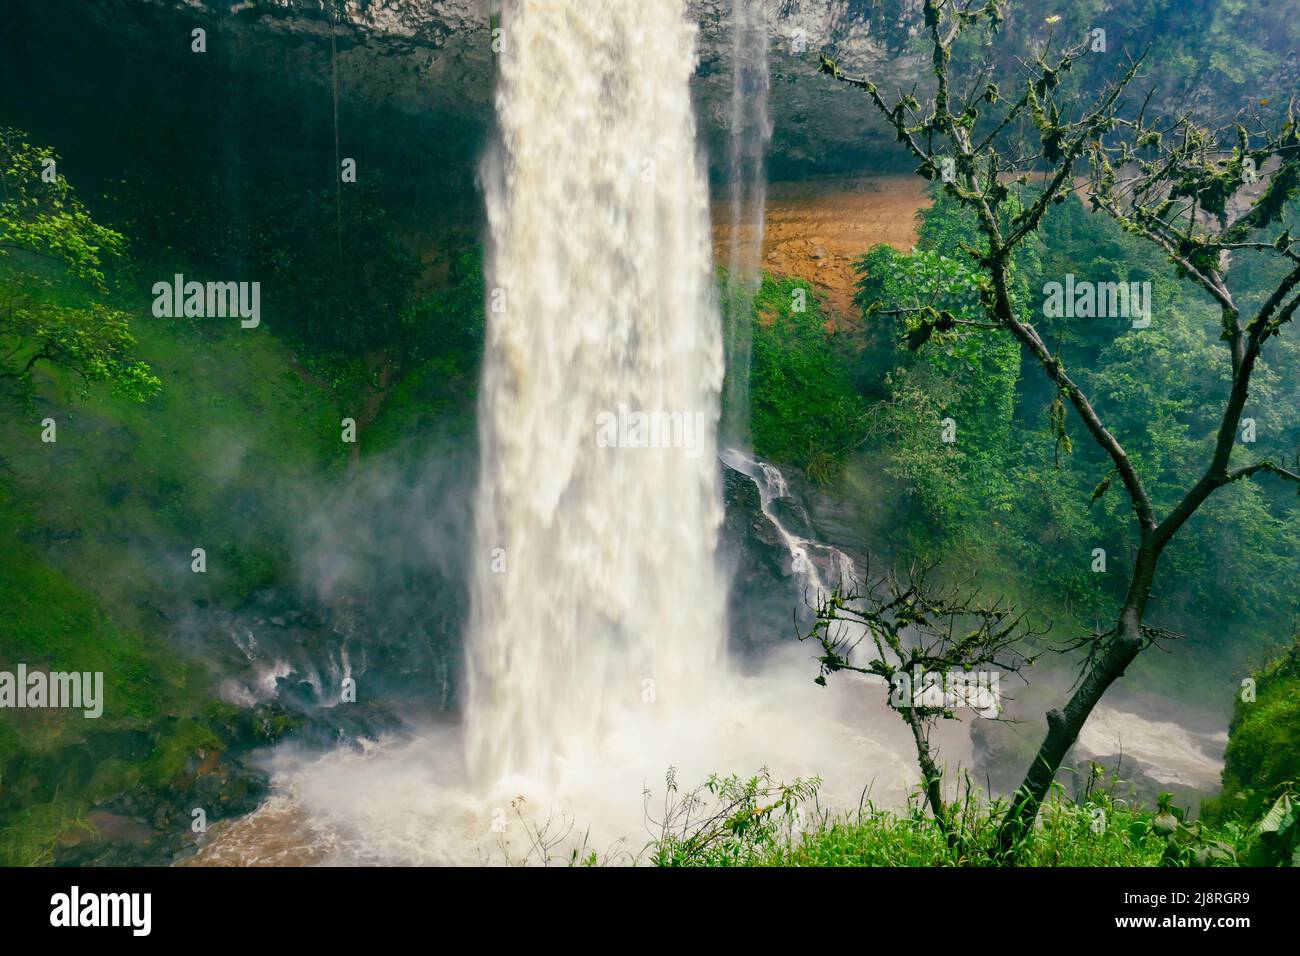 Scenic view of Kapologwe Waterfall in Mbeya, Tanzania Stock Photo